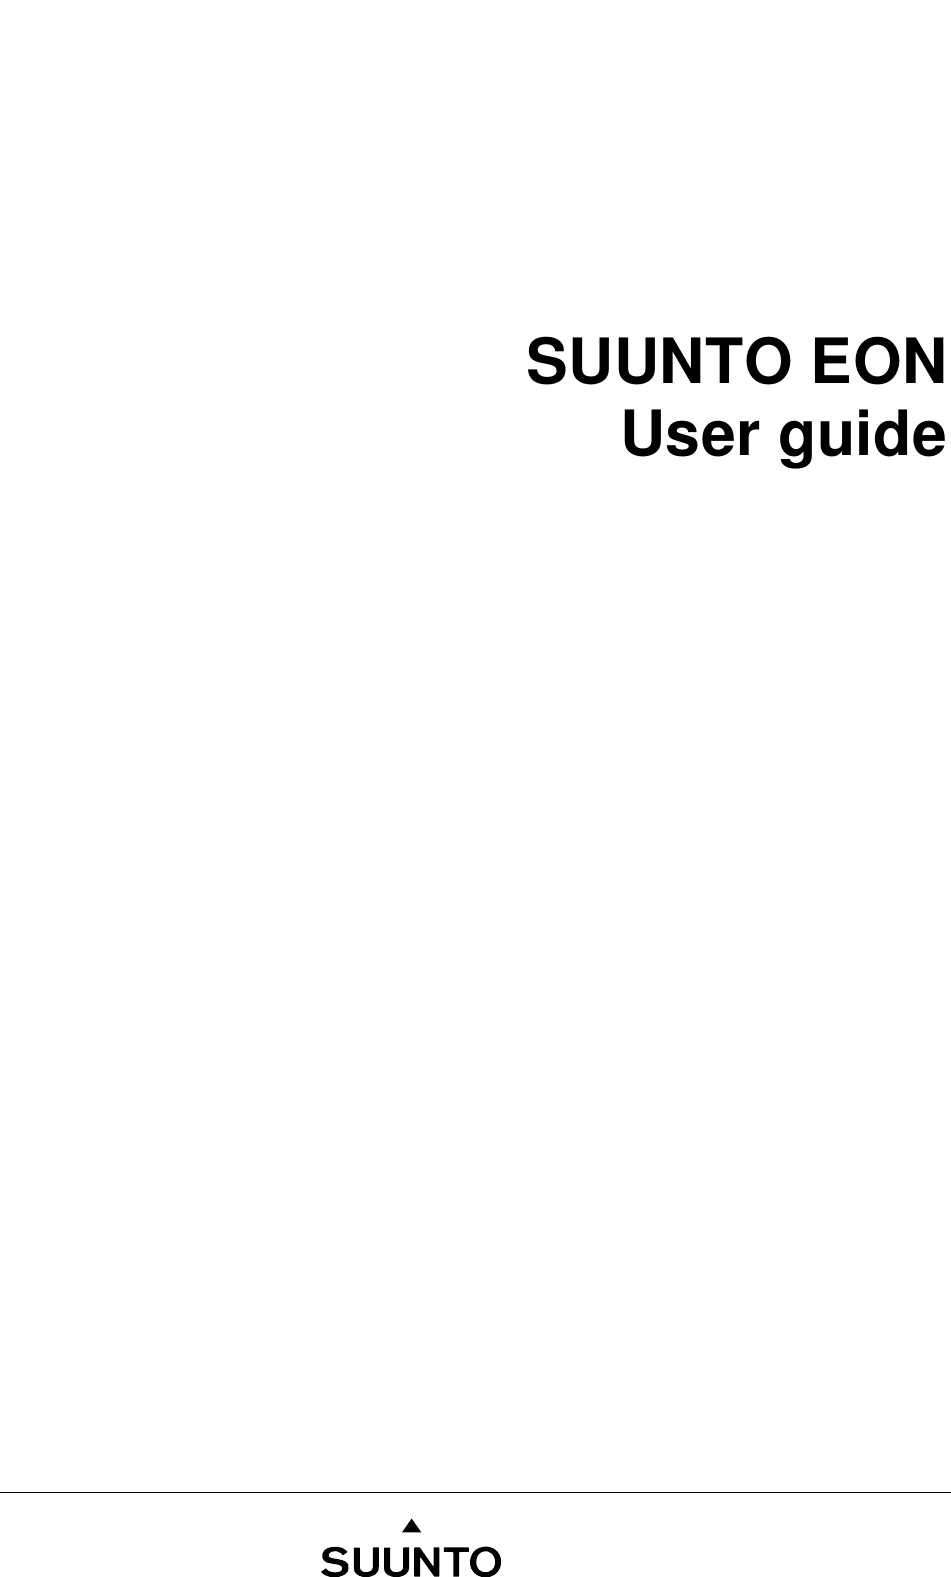      SUUNTO EON  User guide